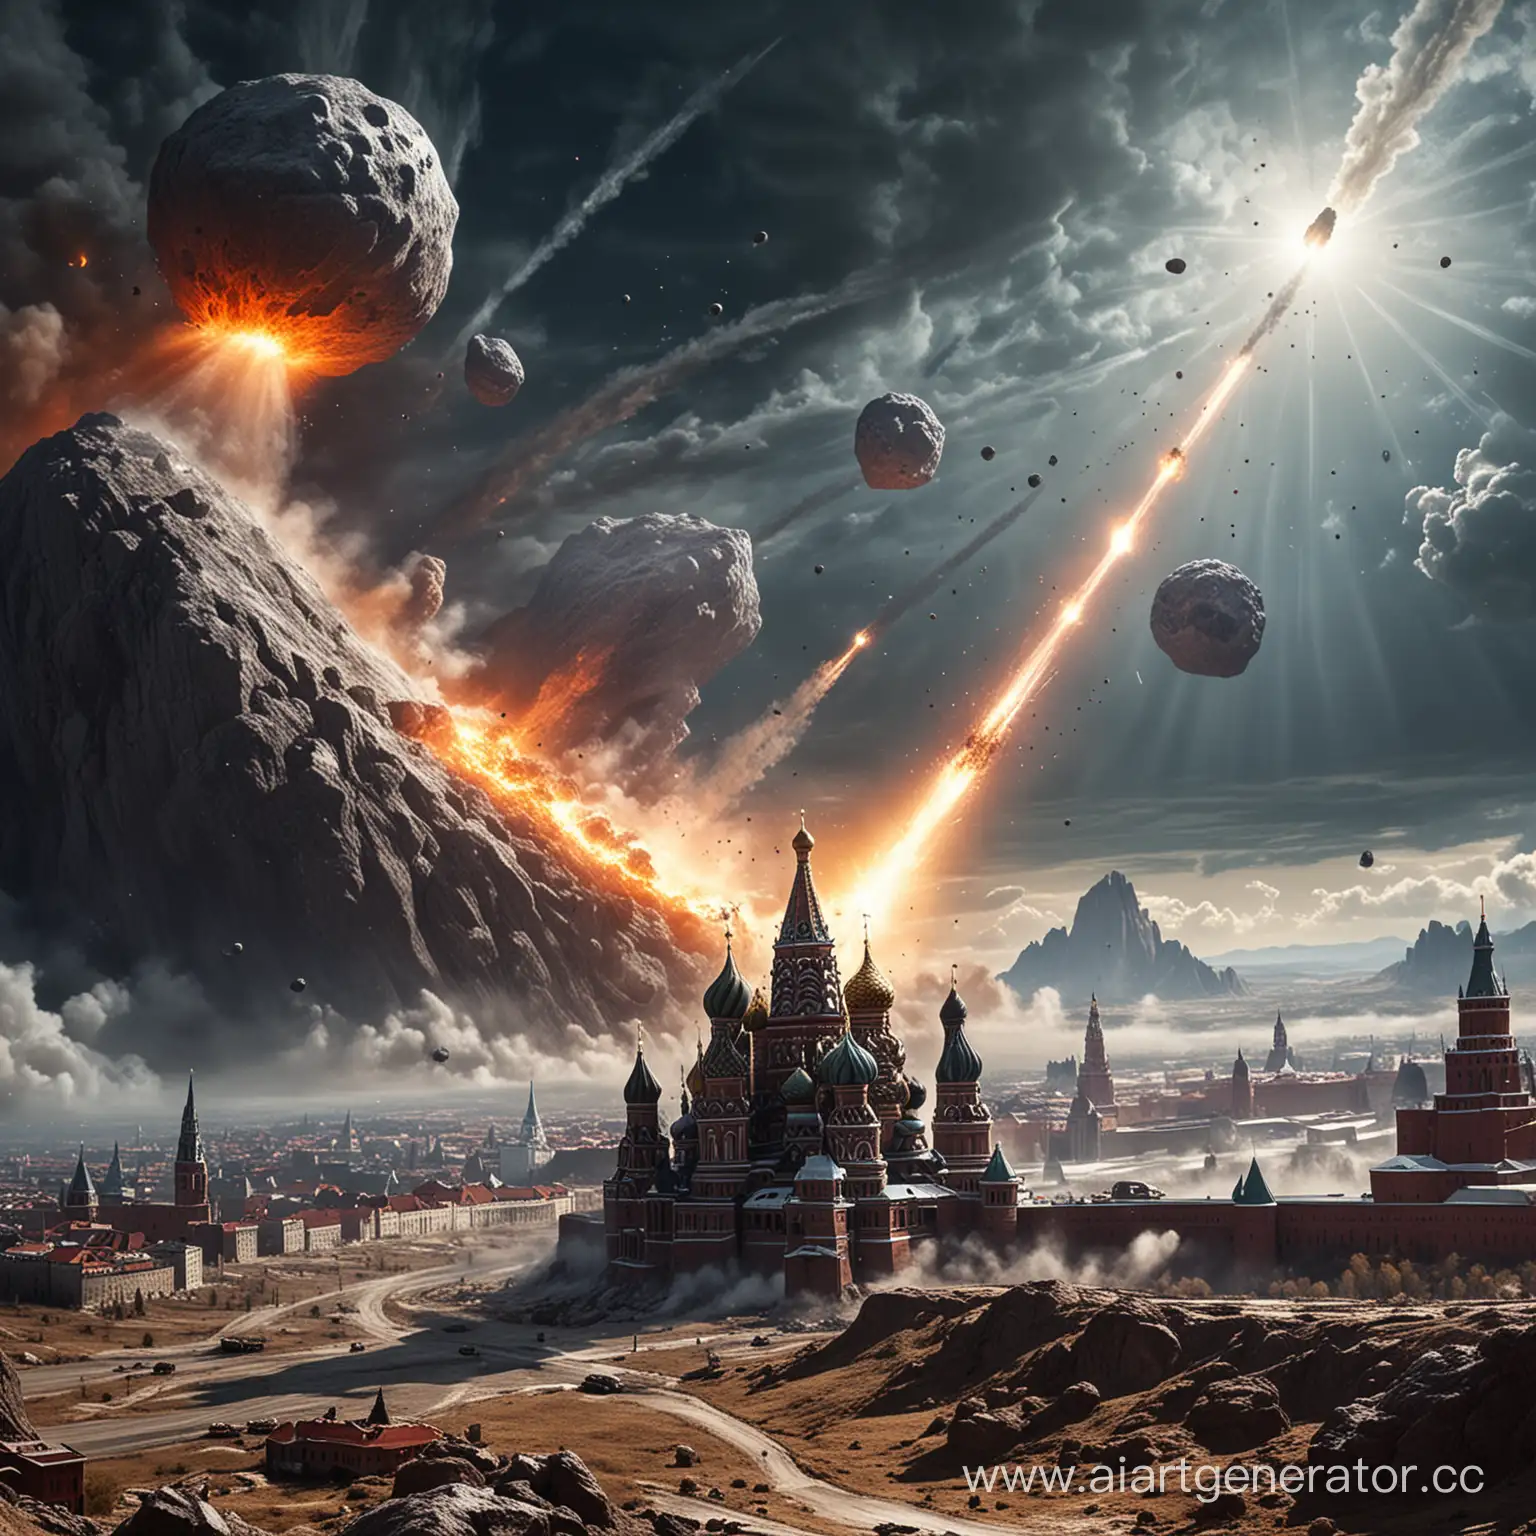 Giant asteroid destroys Kremlin